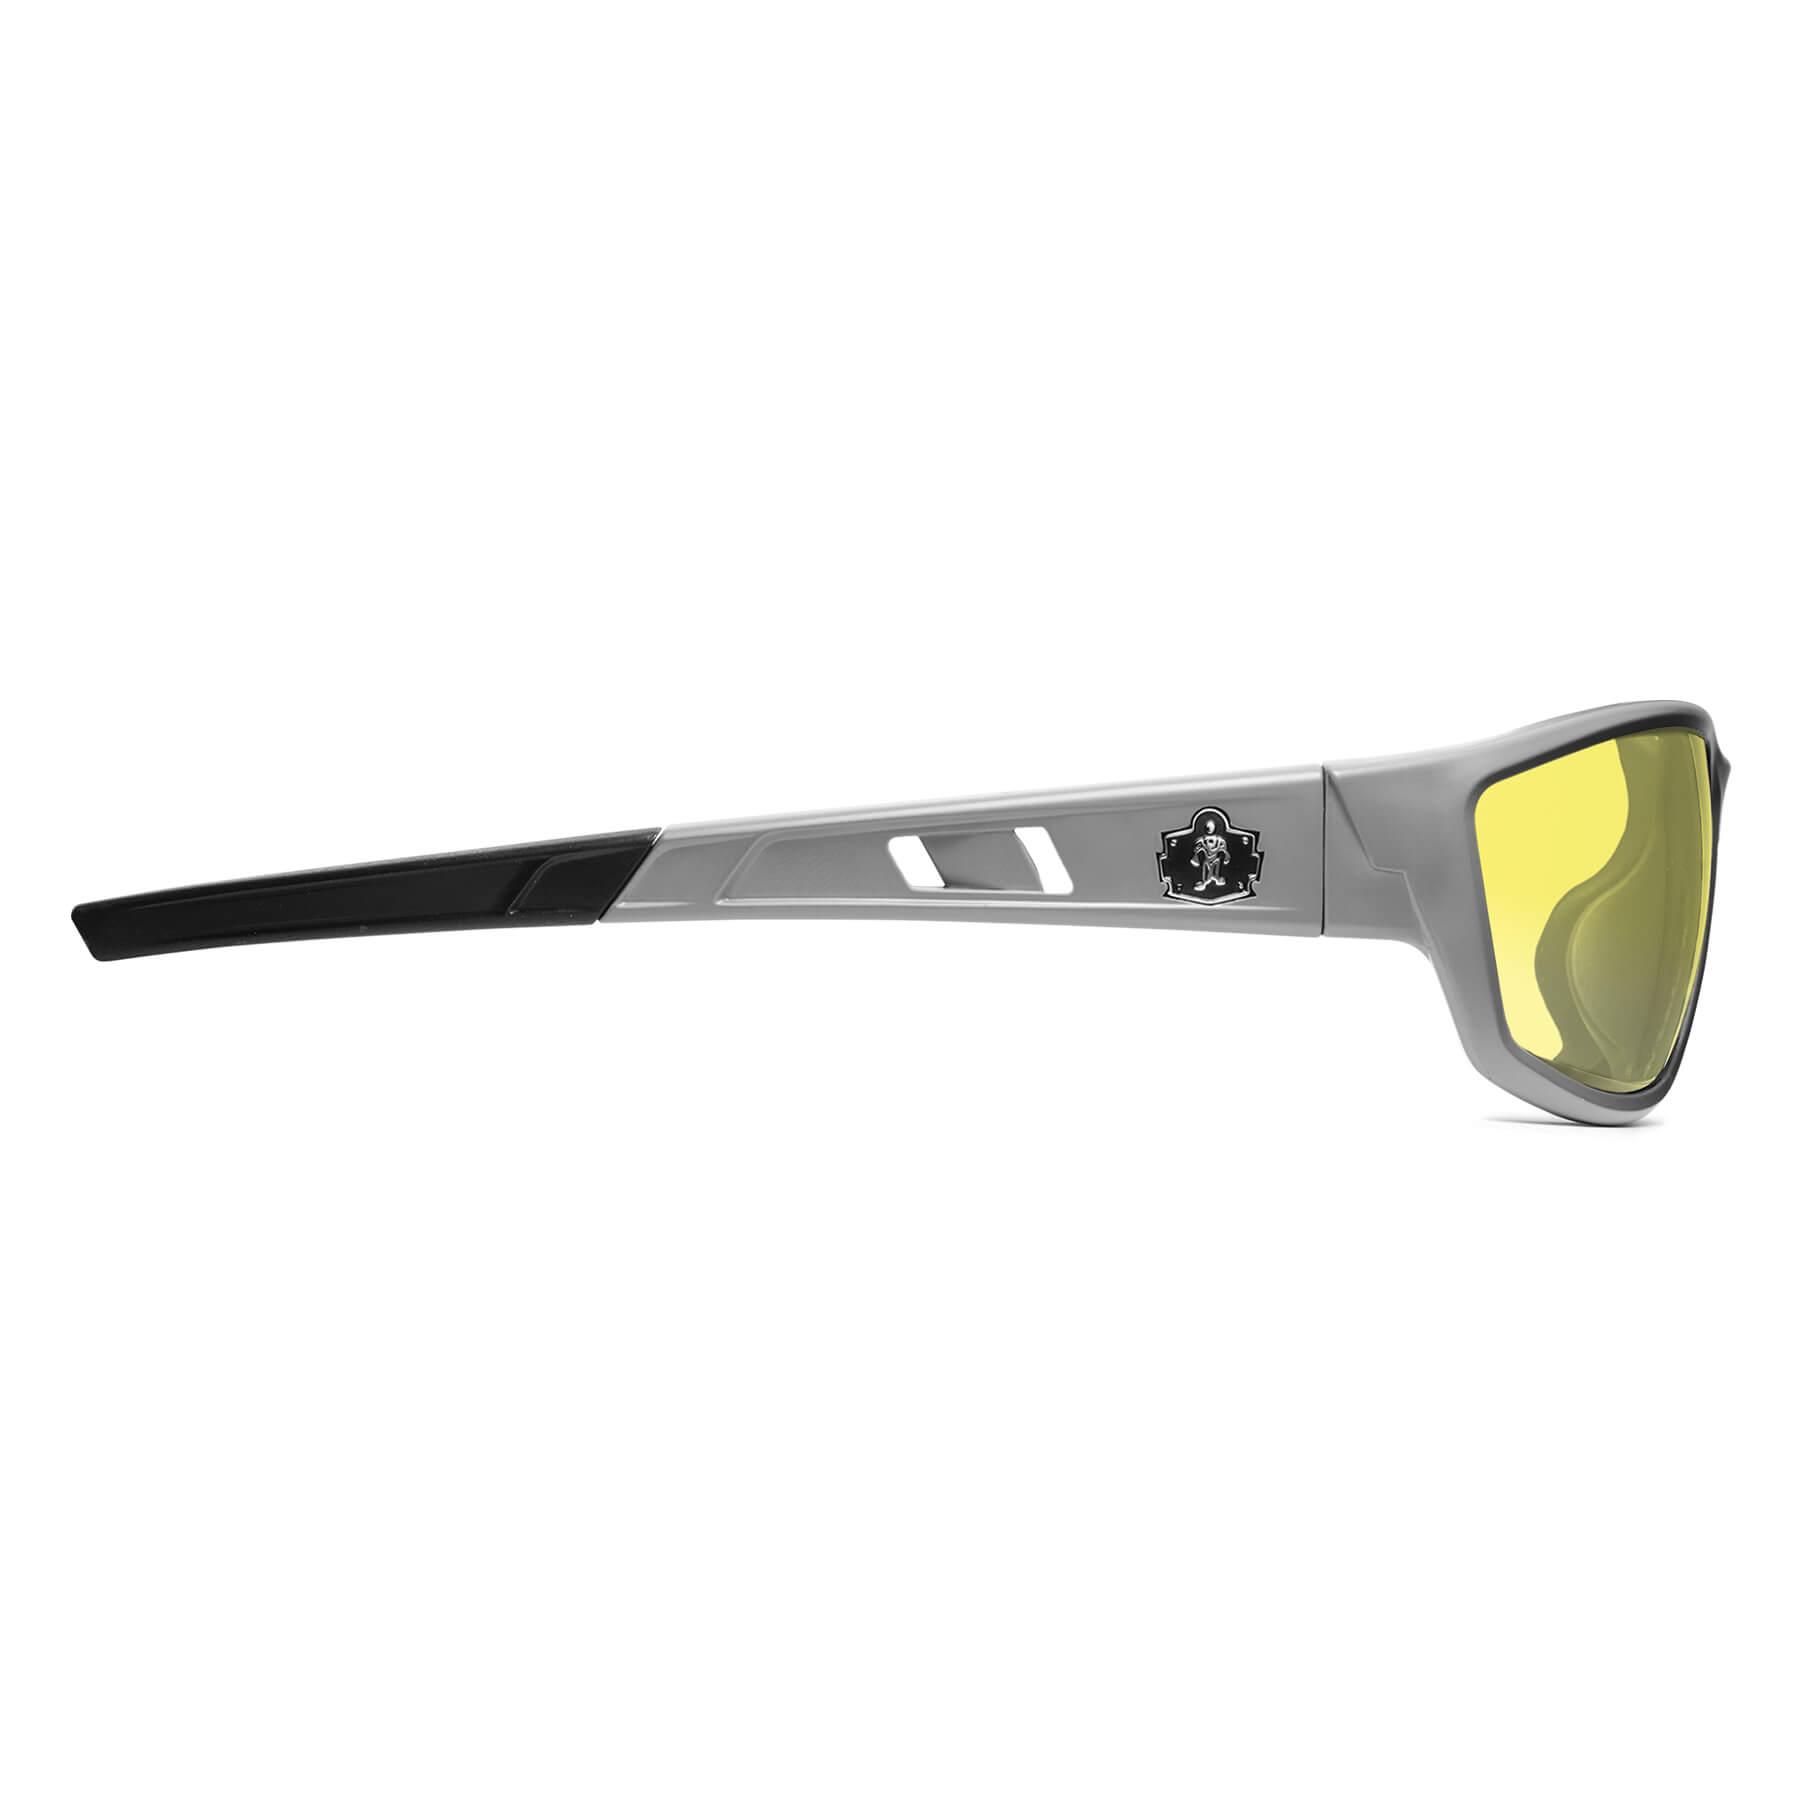 Skullerz Kvasir Safety Glasses (Matte Gray, Yellow Lens)